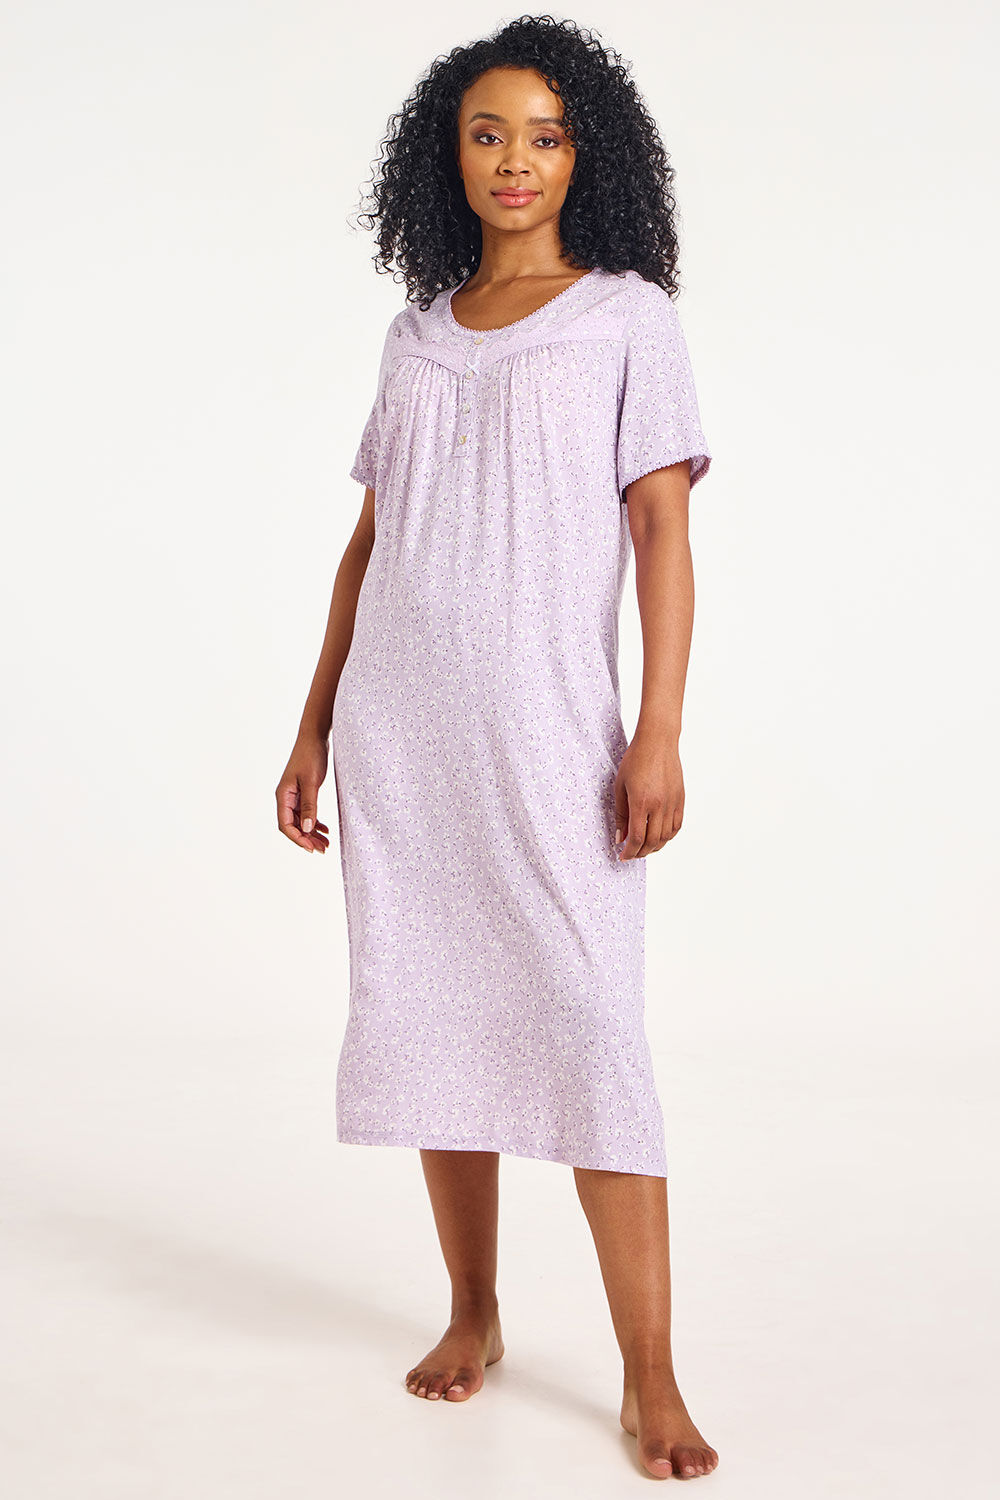 Bonmarche Lavender Short Sleeve Floral Print Woven Nightdress, Size: 20-22